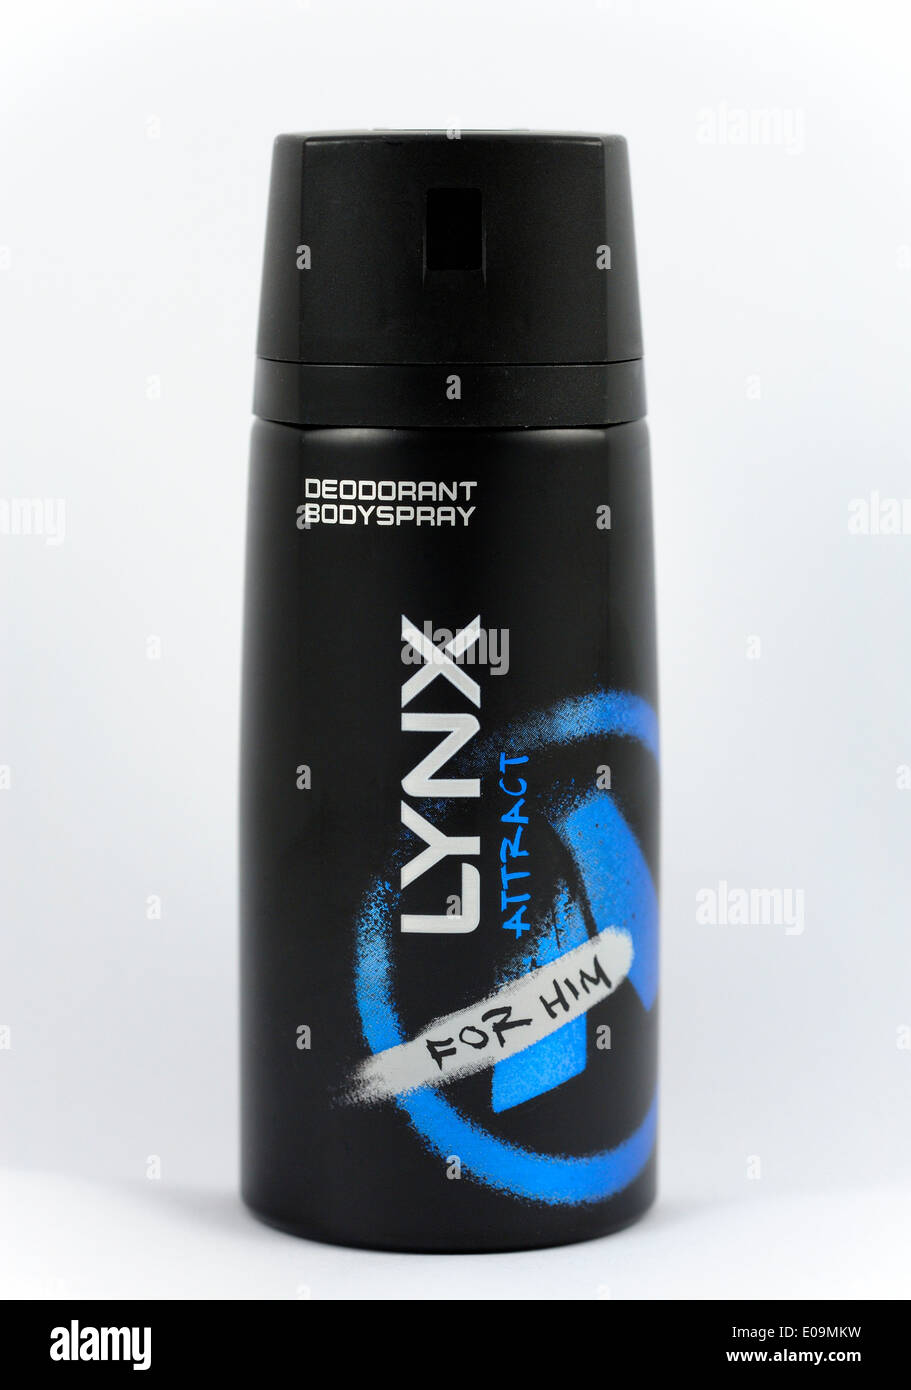 Lynx attract for him deodorant body spray Stock Photo - Alamy